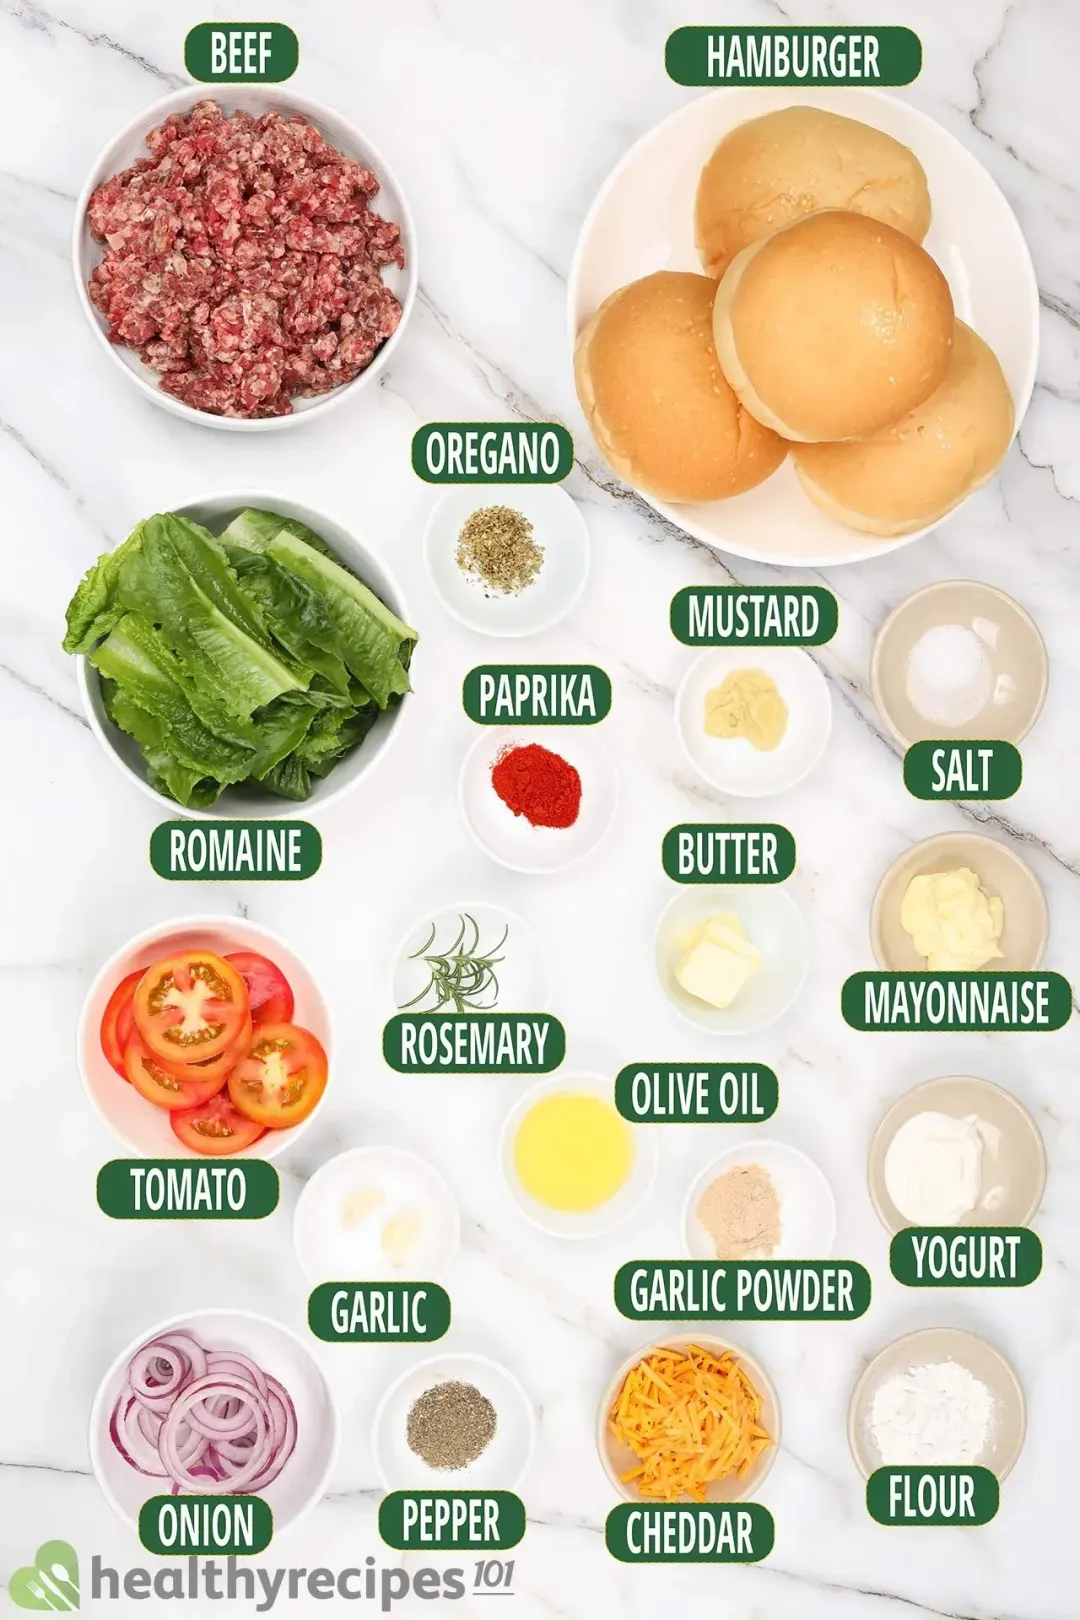 ingredients for beef burger